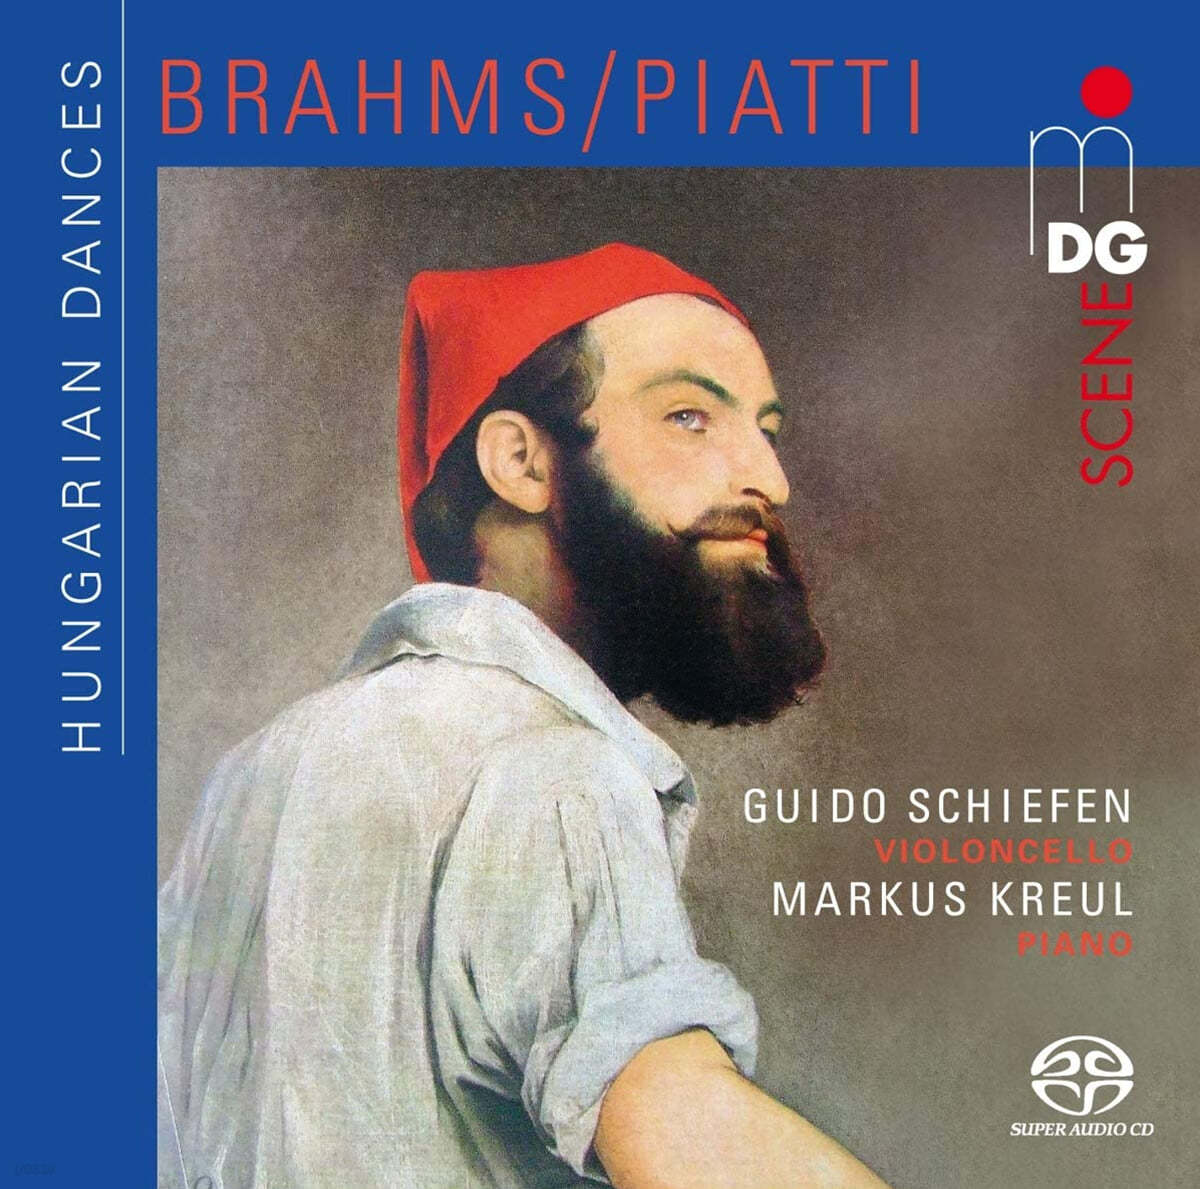 Guido Schiefen / Markus Kreul 브람스-피아티: 헝가리 무곡 [첼로 편곡 버전] (Brahms-Piatti: Hungarian Dances) 